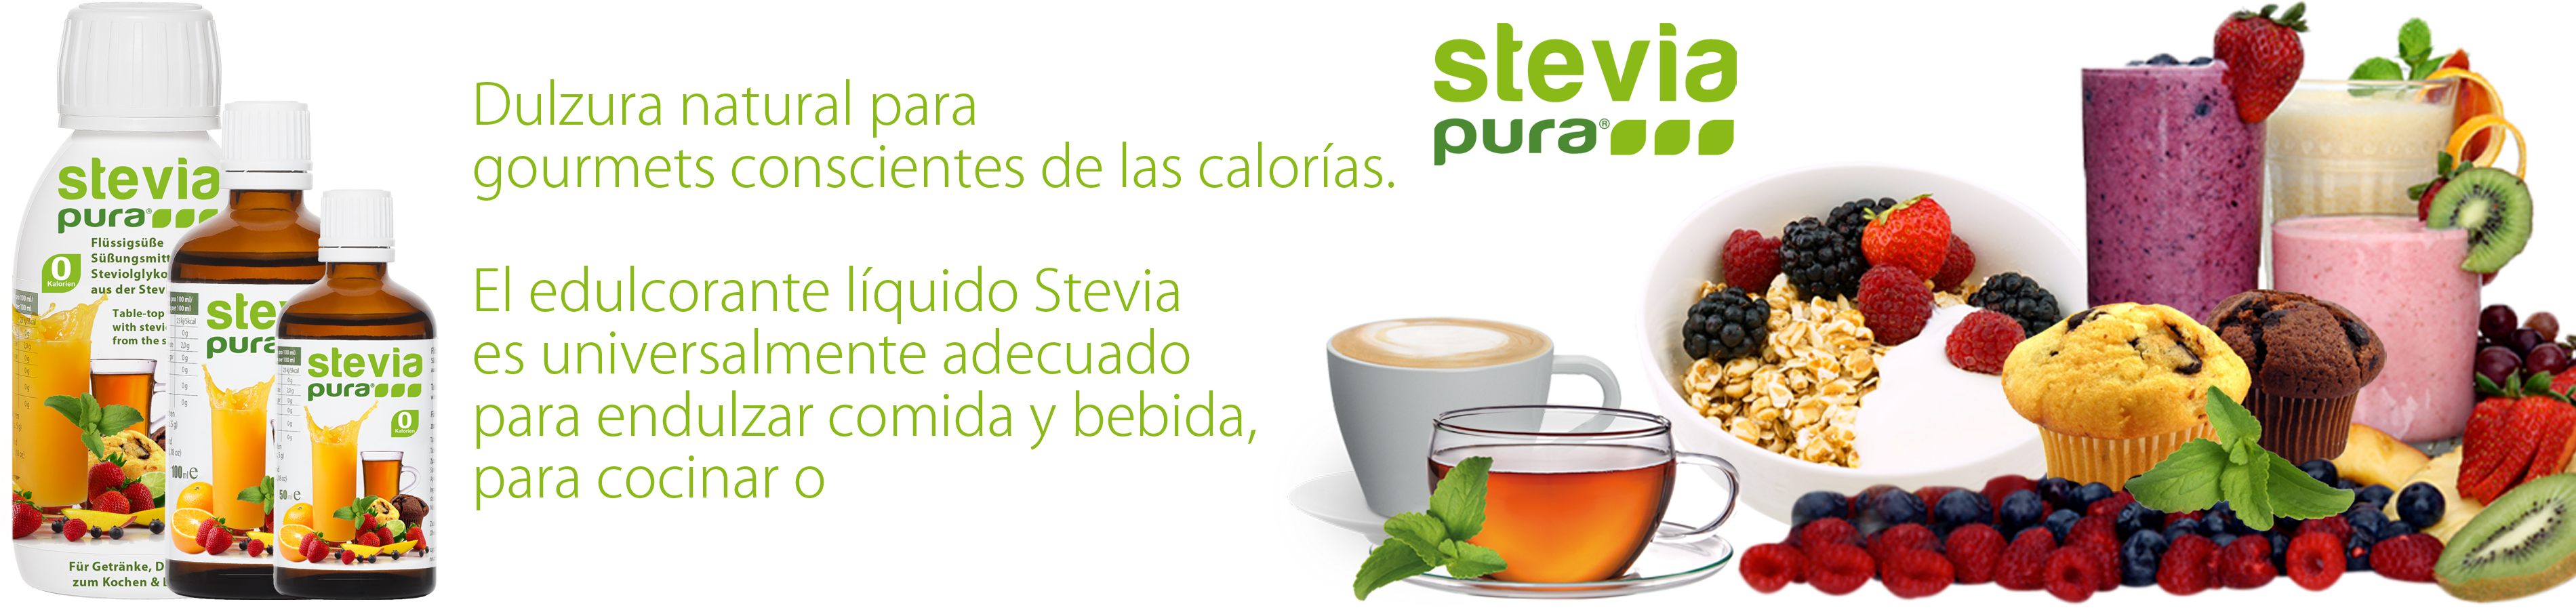 Comprar edulcorante líquido Stevia Endulzante stevia-pura